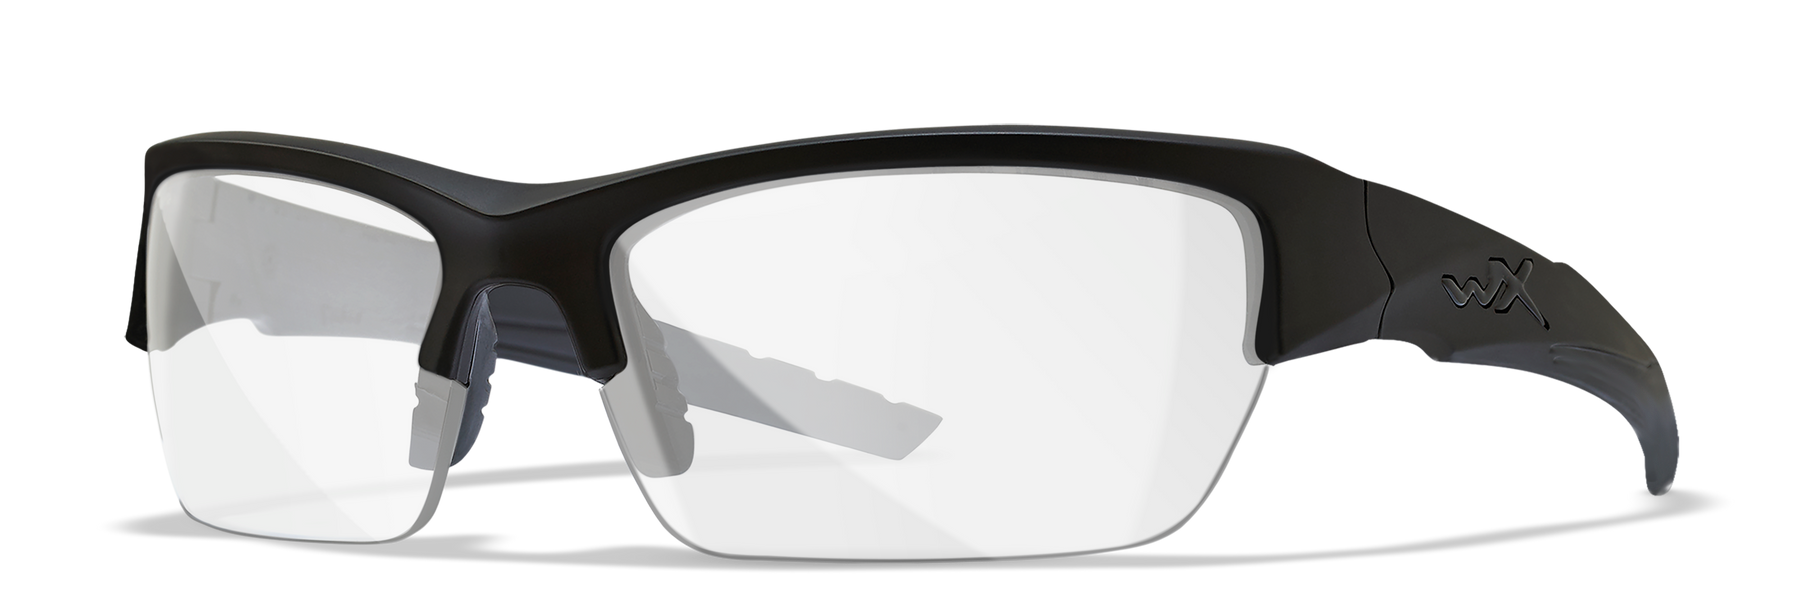 Wiley-X Valor - Ballistic Eyewear Tactical Sunglasses